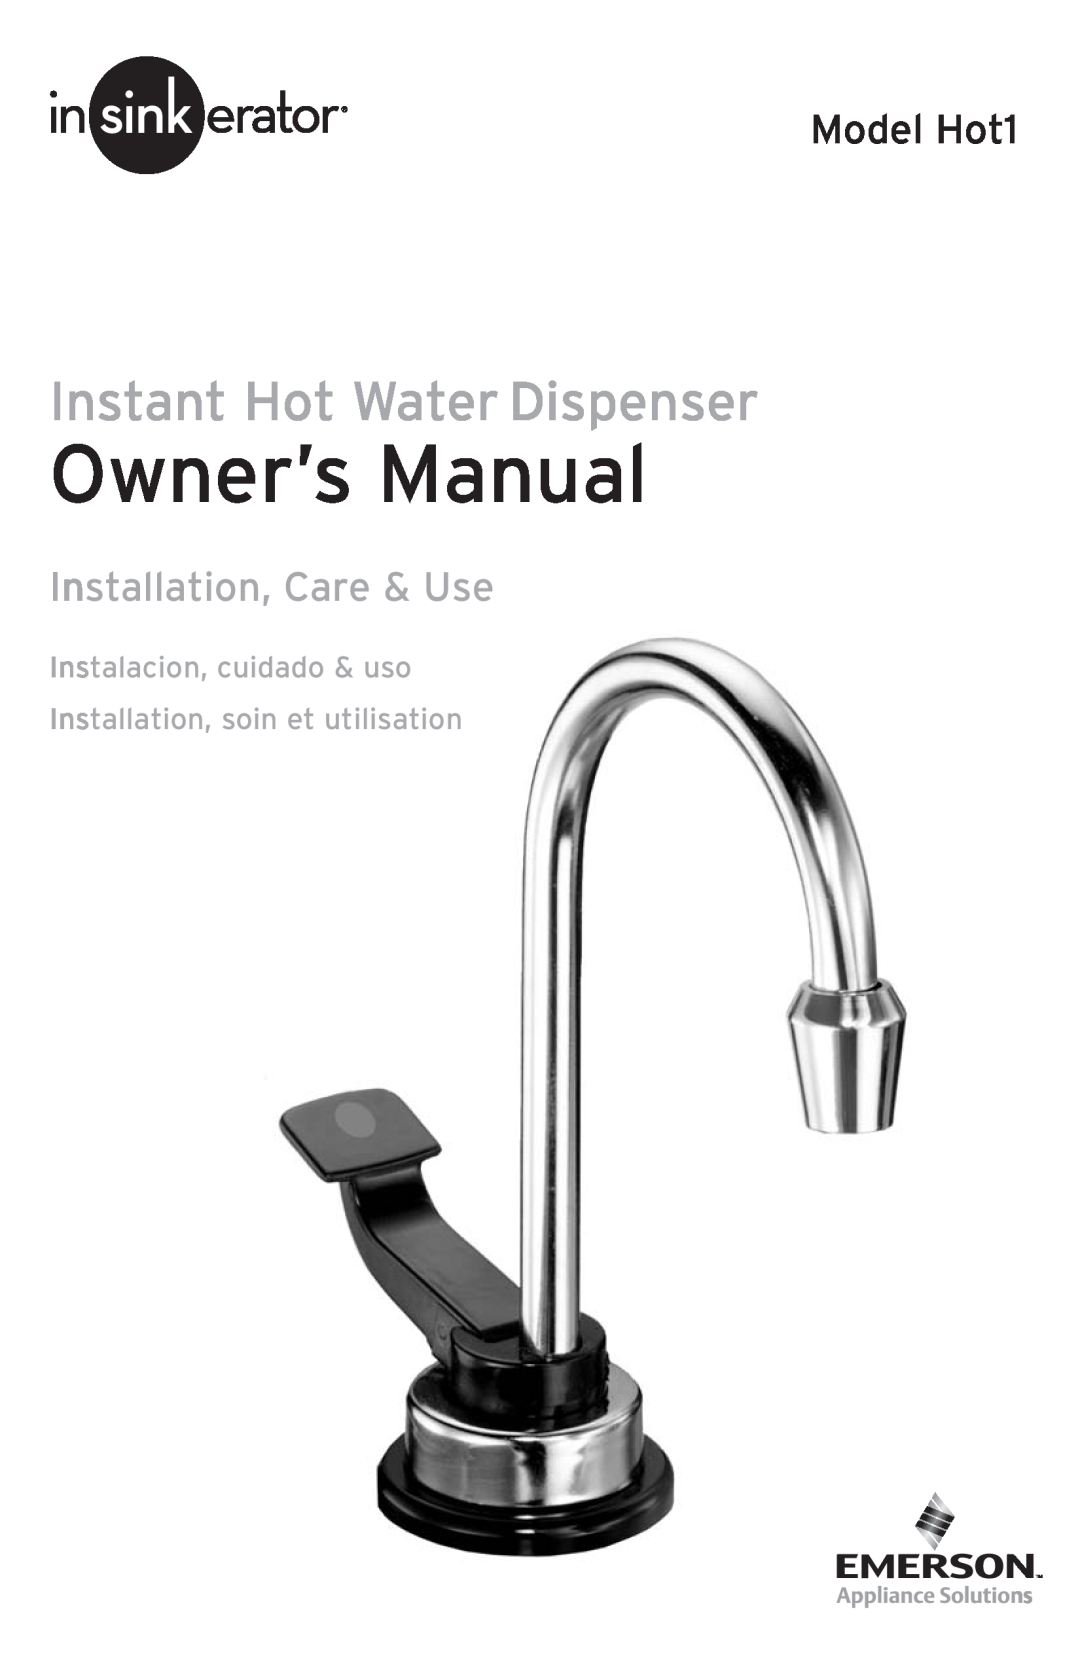 Emerson manual Model Hot1, Installation, Care & Use, Instant Hot Water Dispenser, Instalacion, cuidado & uso 